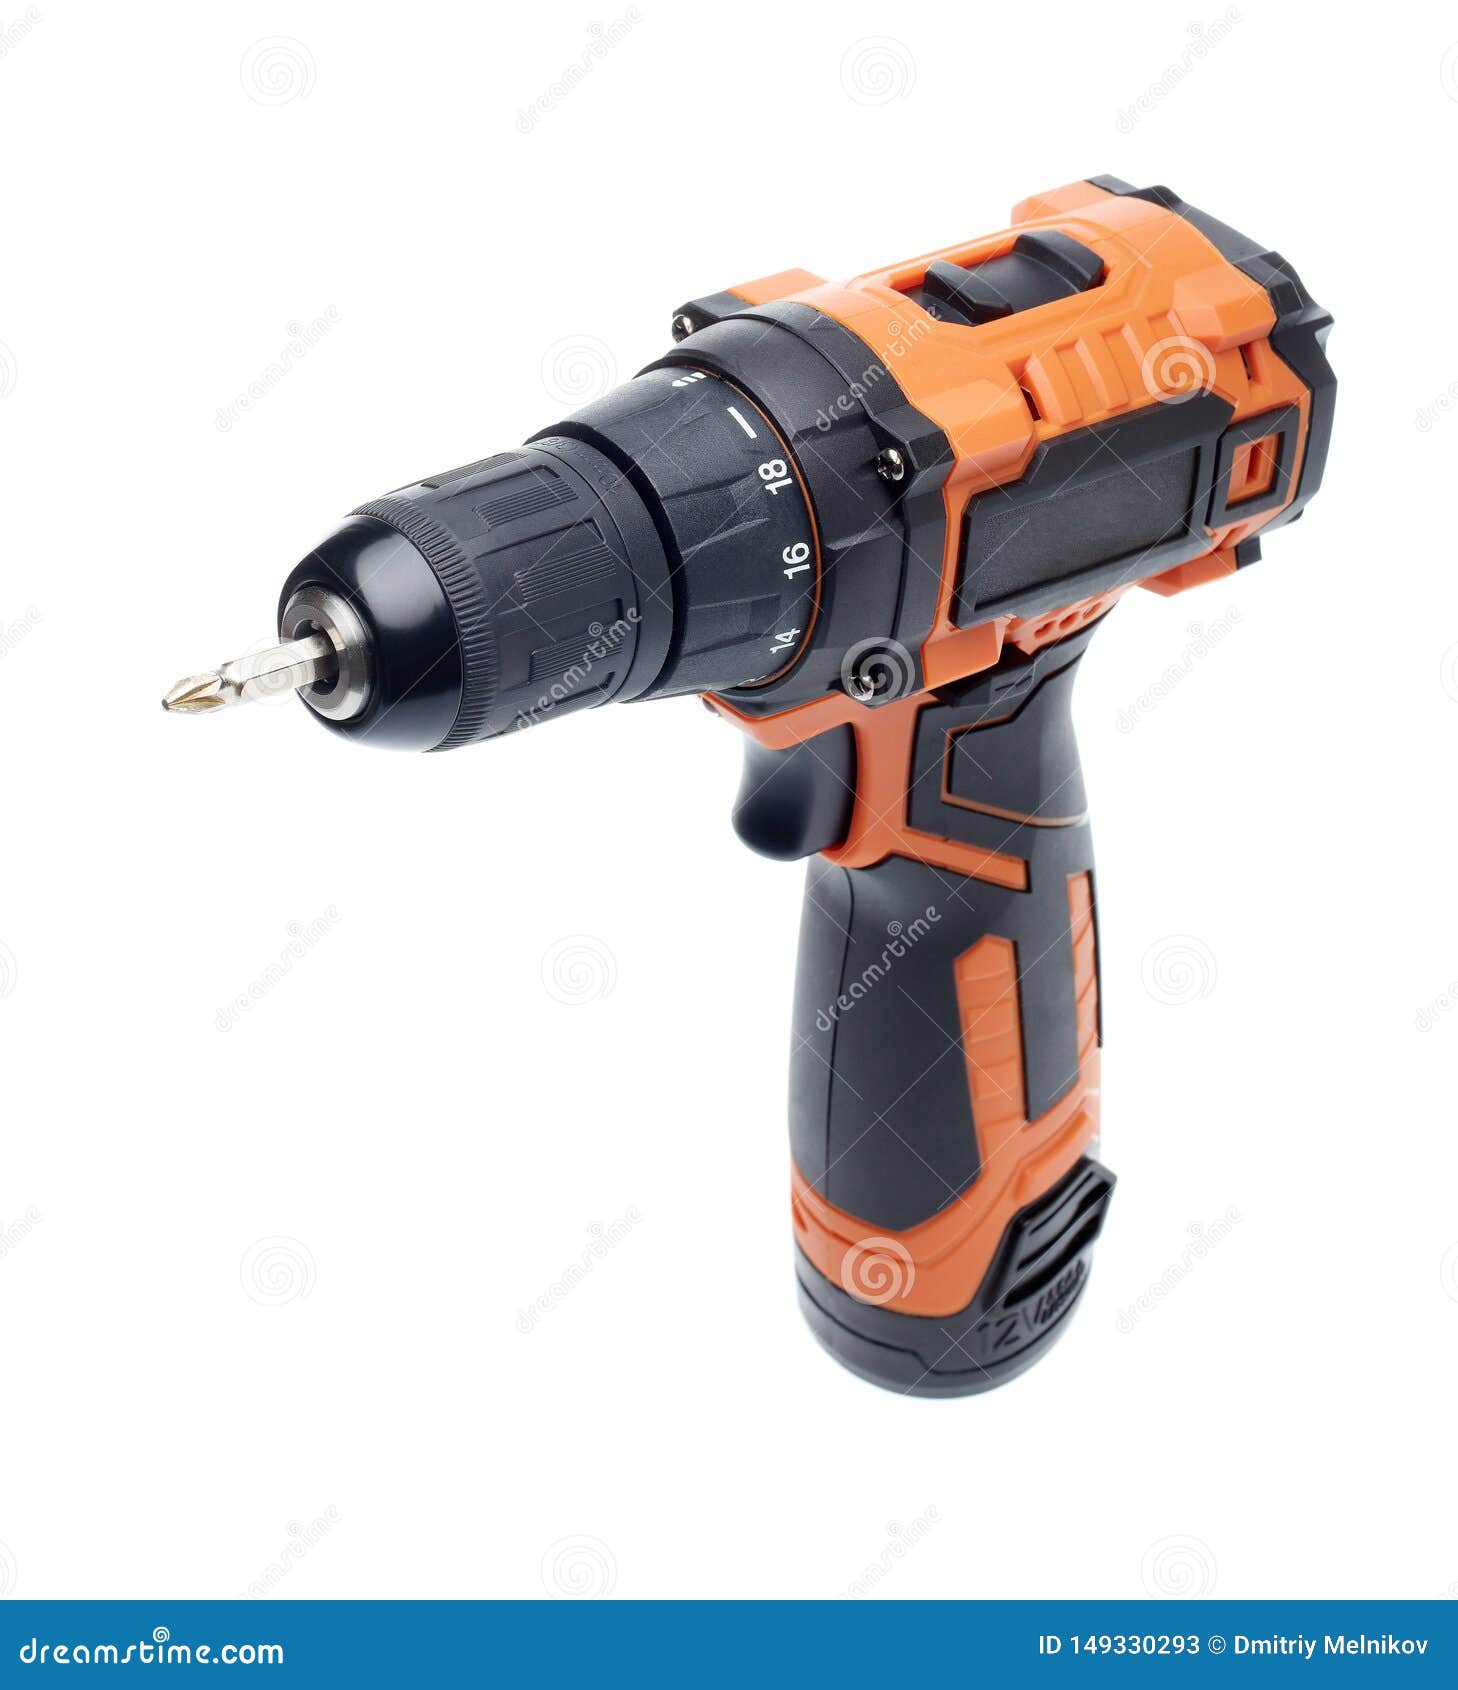 Cordless drill gun stock image. Image of drilling, improvement - 149330293